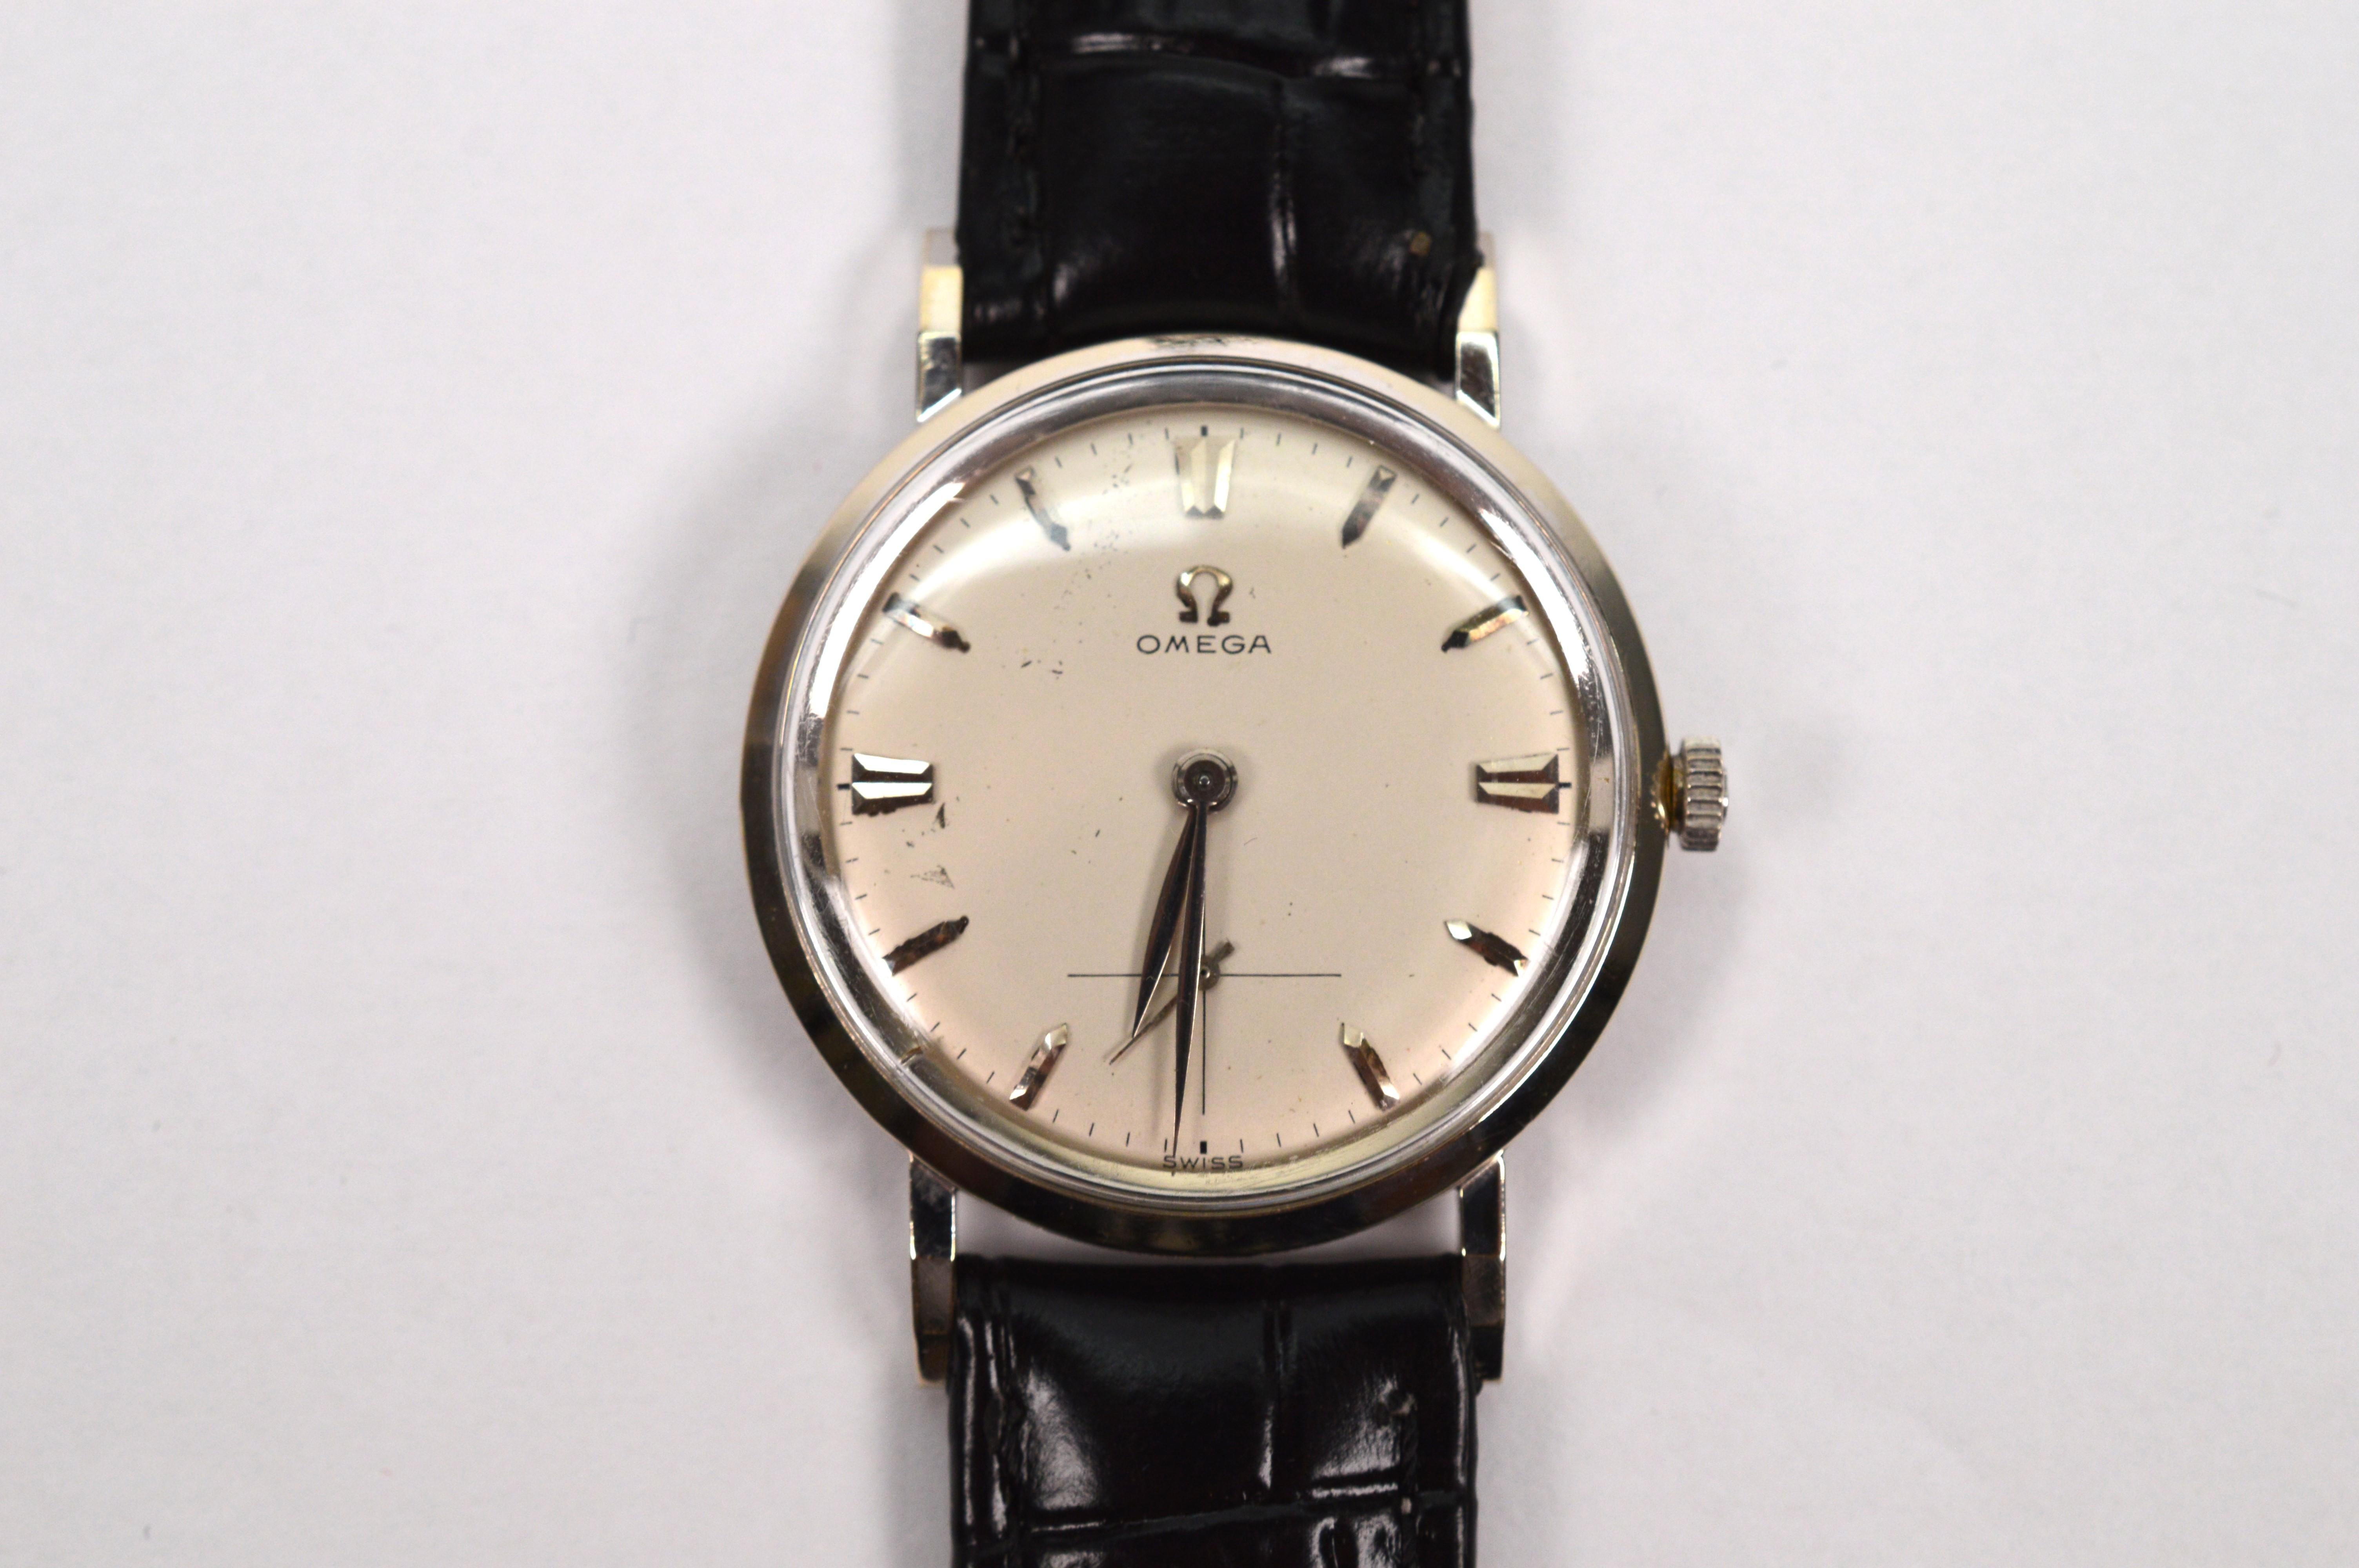 Retro Classic Omega 302 14K White Gold Men's Wrist Watch For Sale